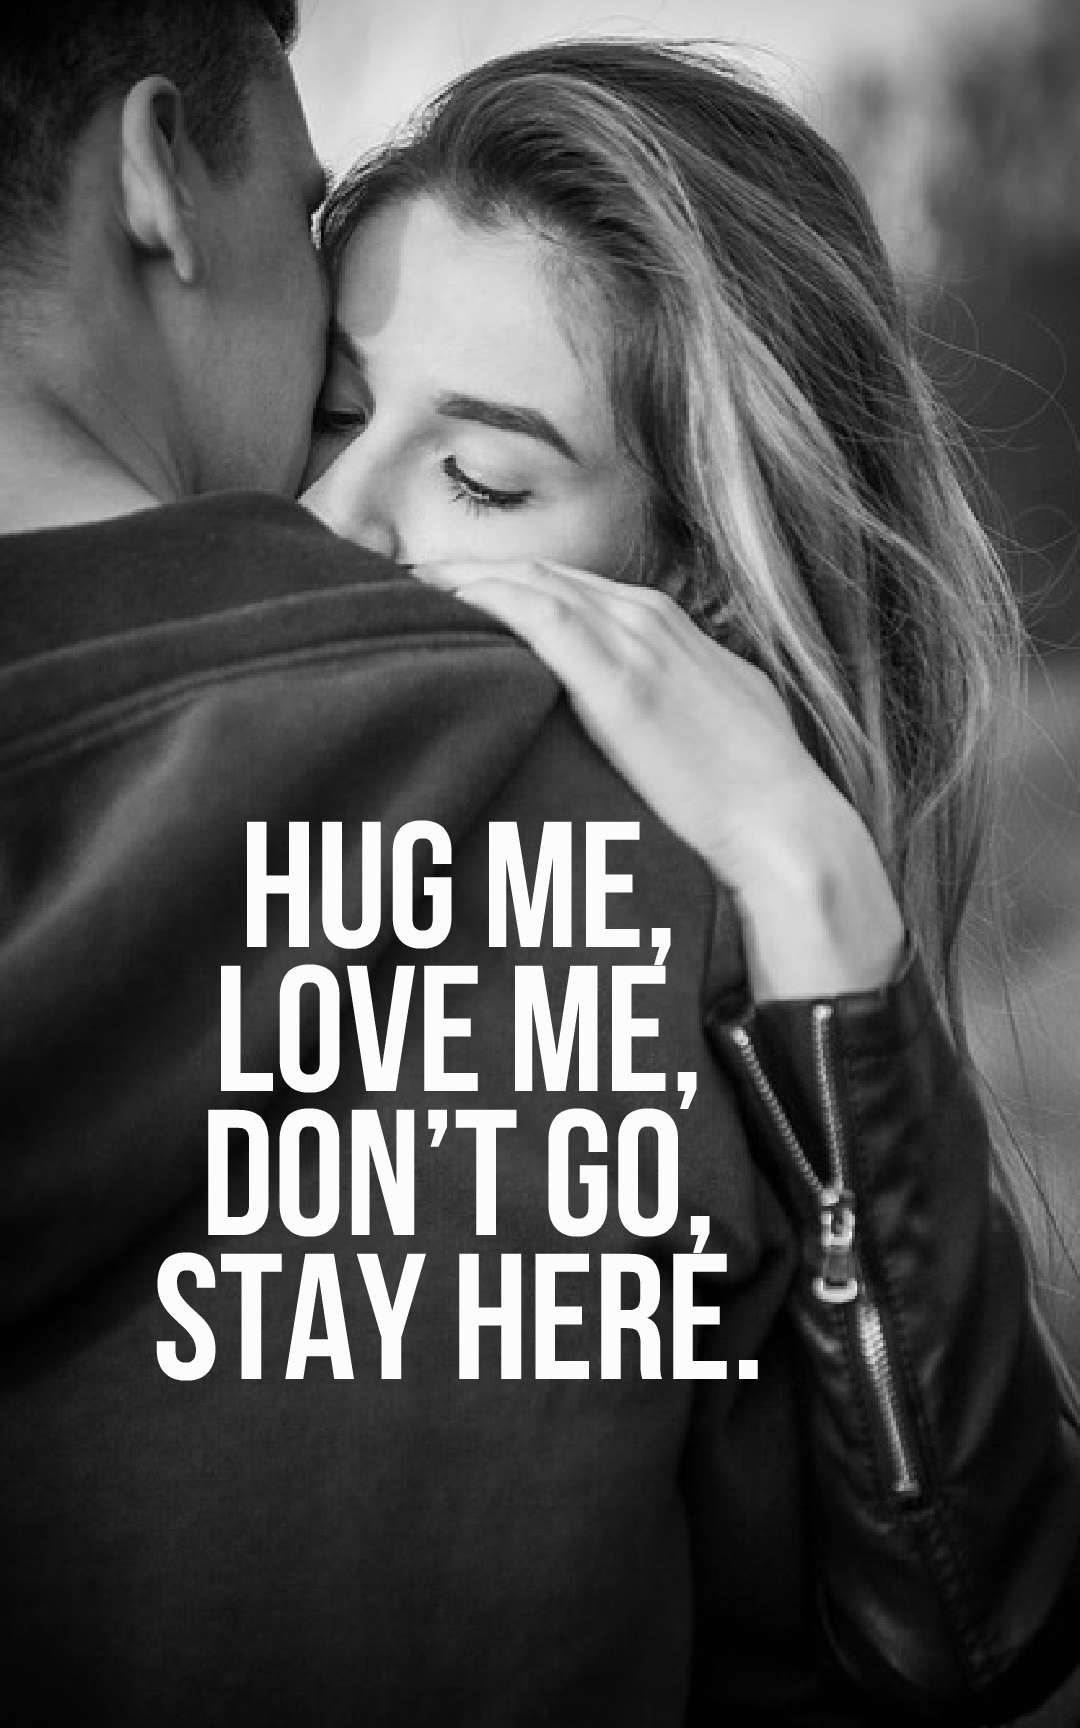 Hug me, love me, don’t go, stay here.